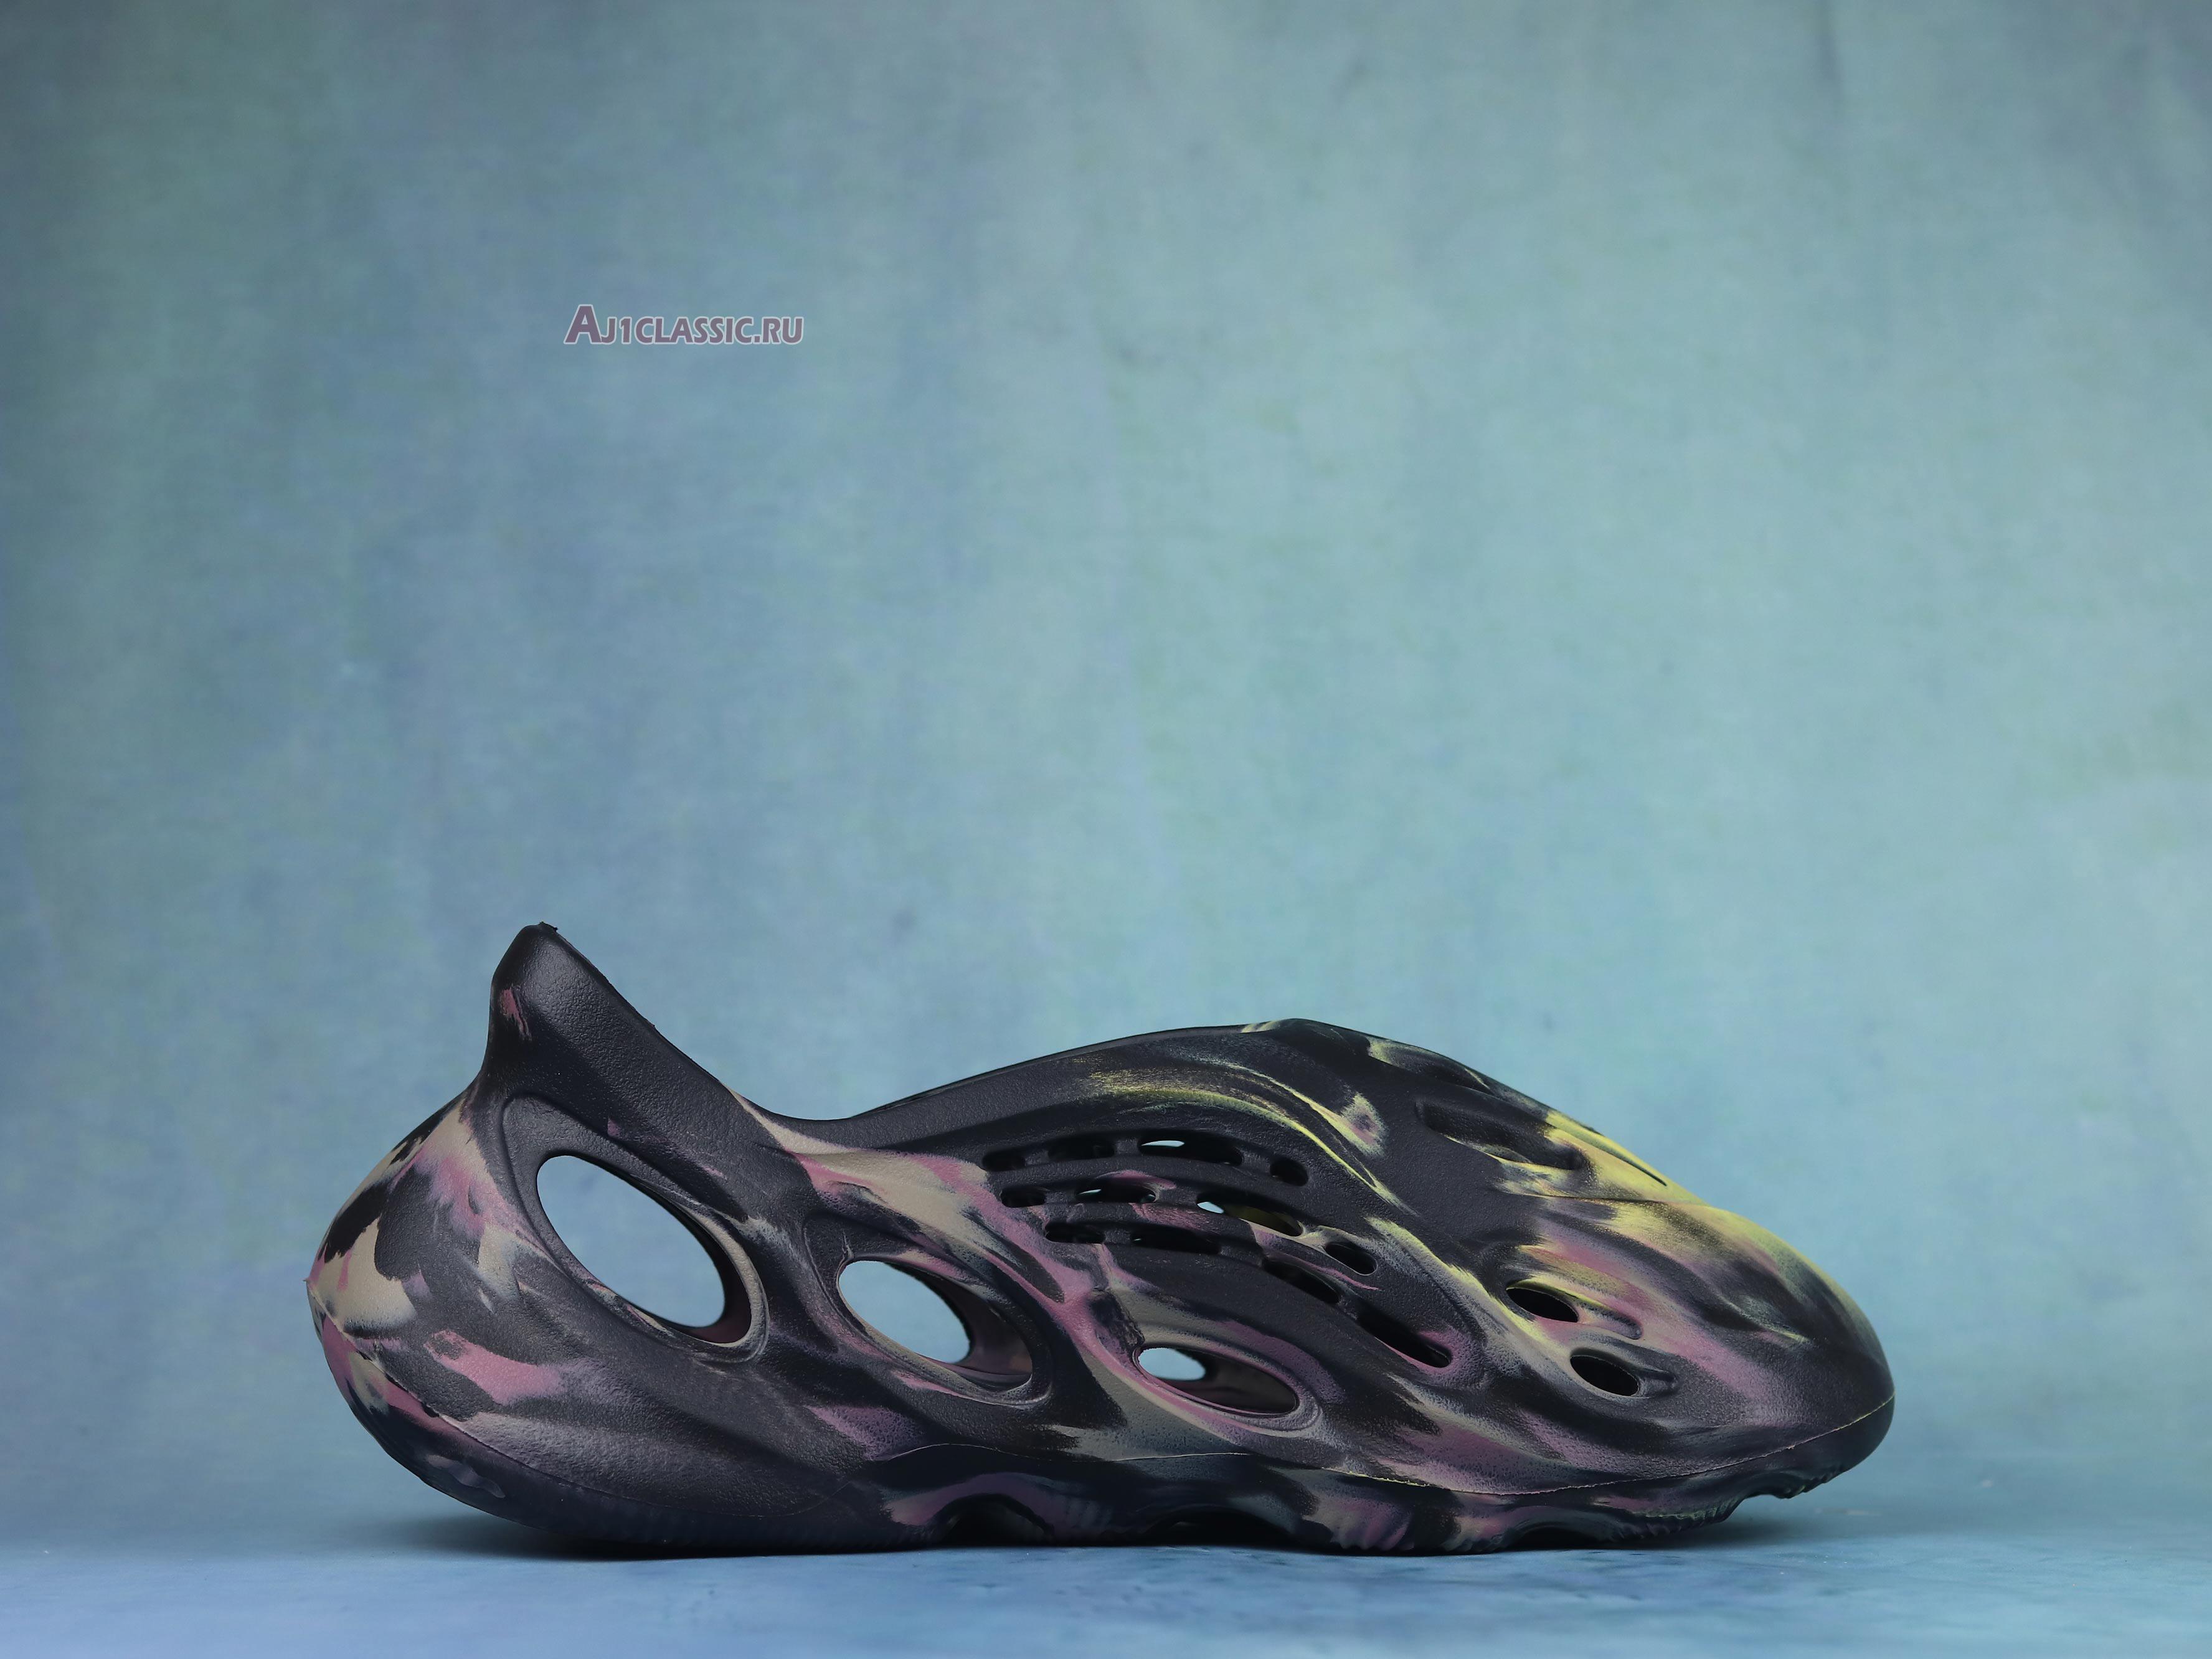 Adidas Yeezy Foam Runner "MX Carbon" IG9562